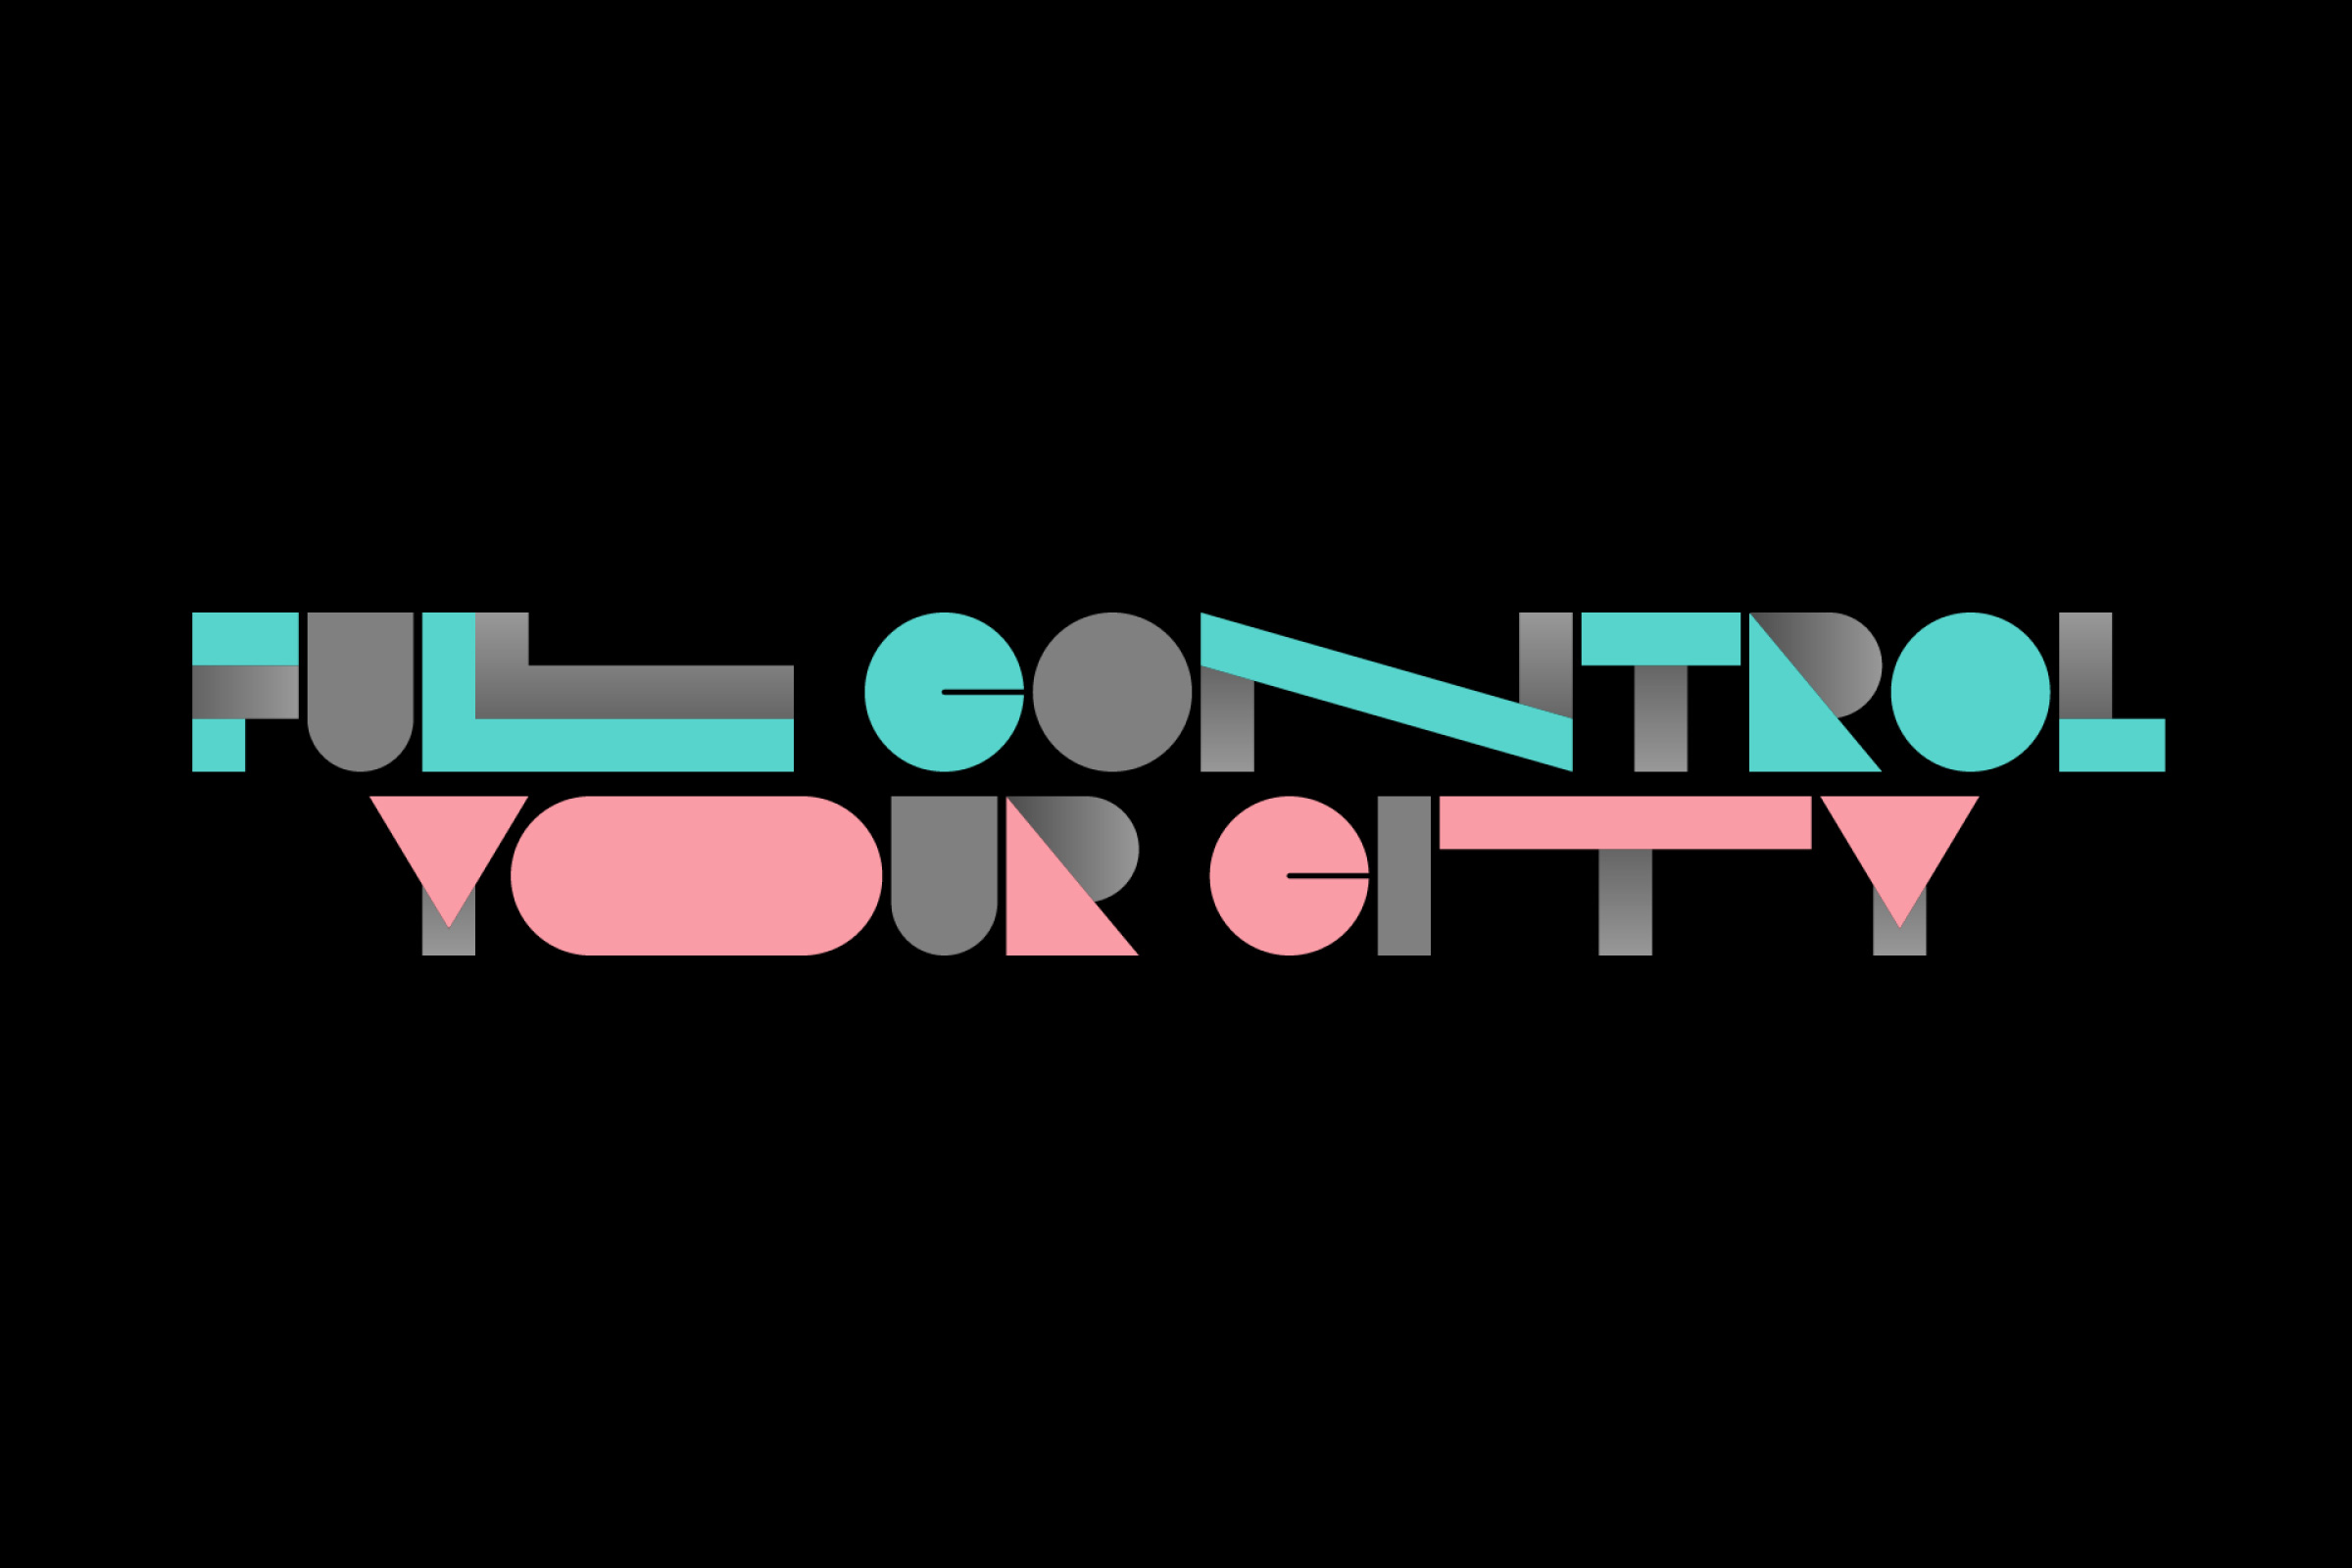 au ODOROKI — No.1 Full Control Your City